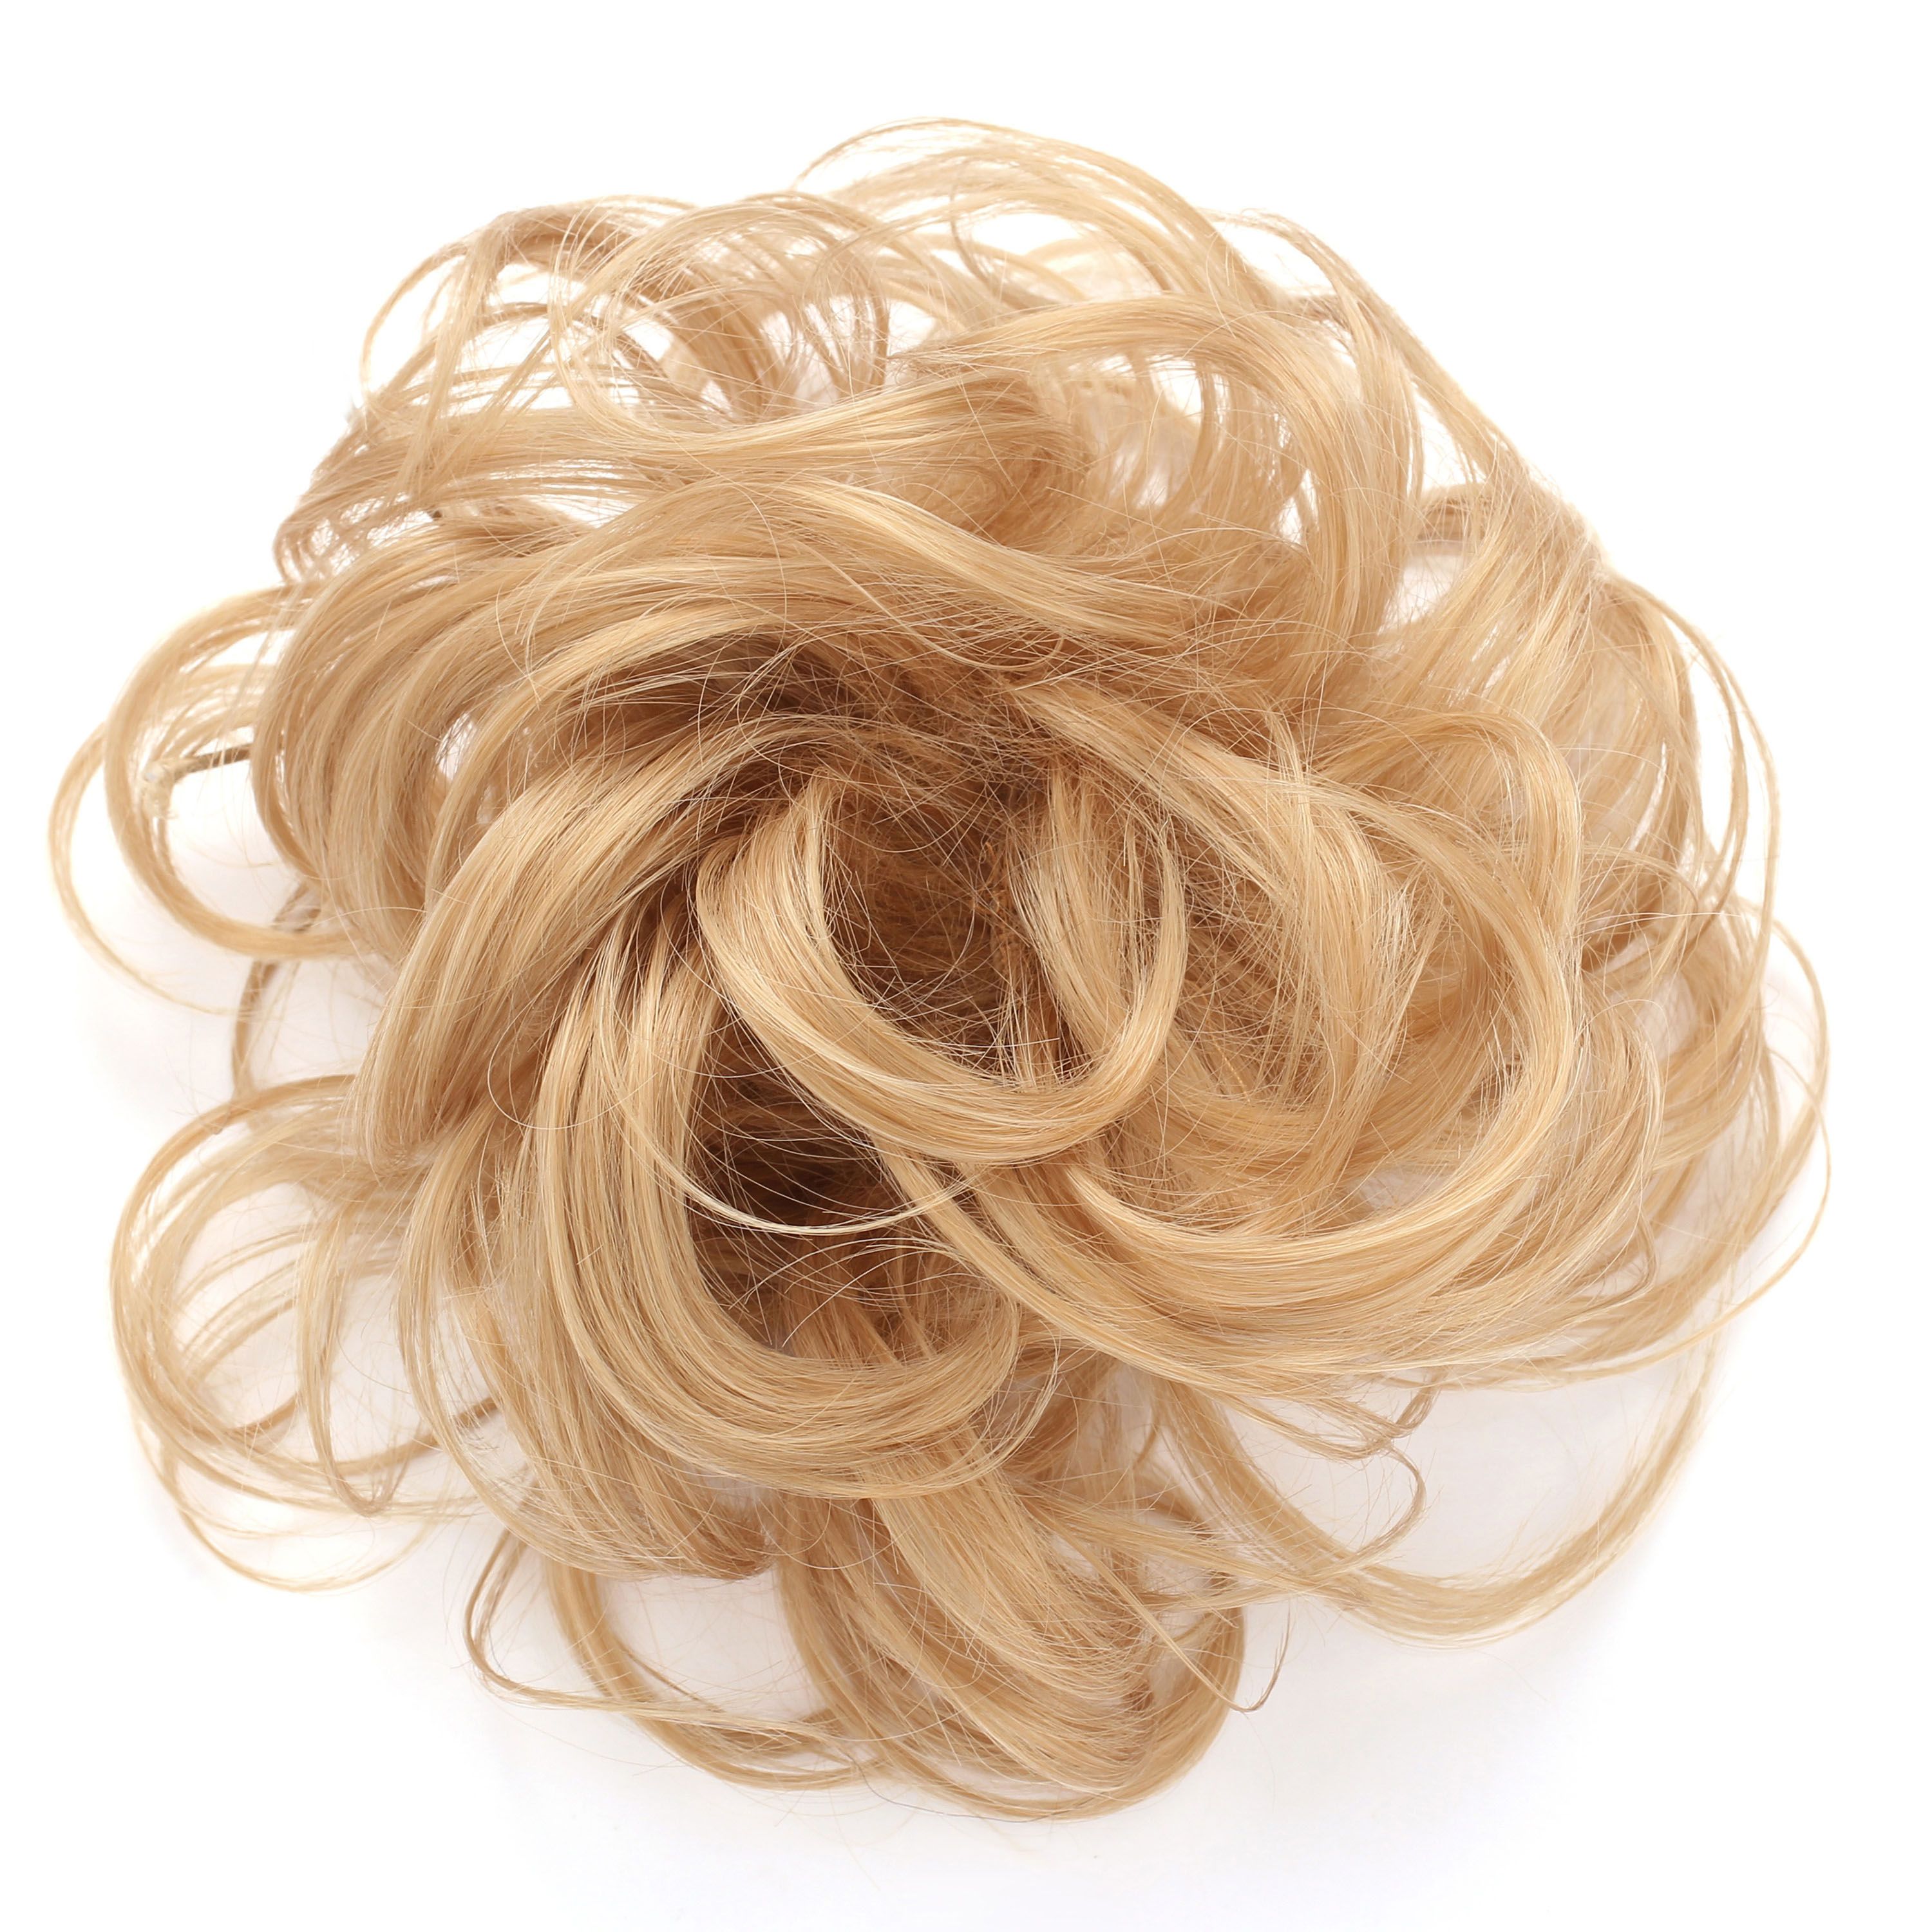 OneDor Synthetic Messy Hair Bun Extension Chignon Hair Piece (25#-Light Golden Blonde)